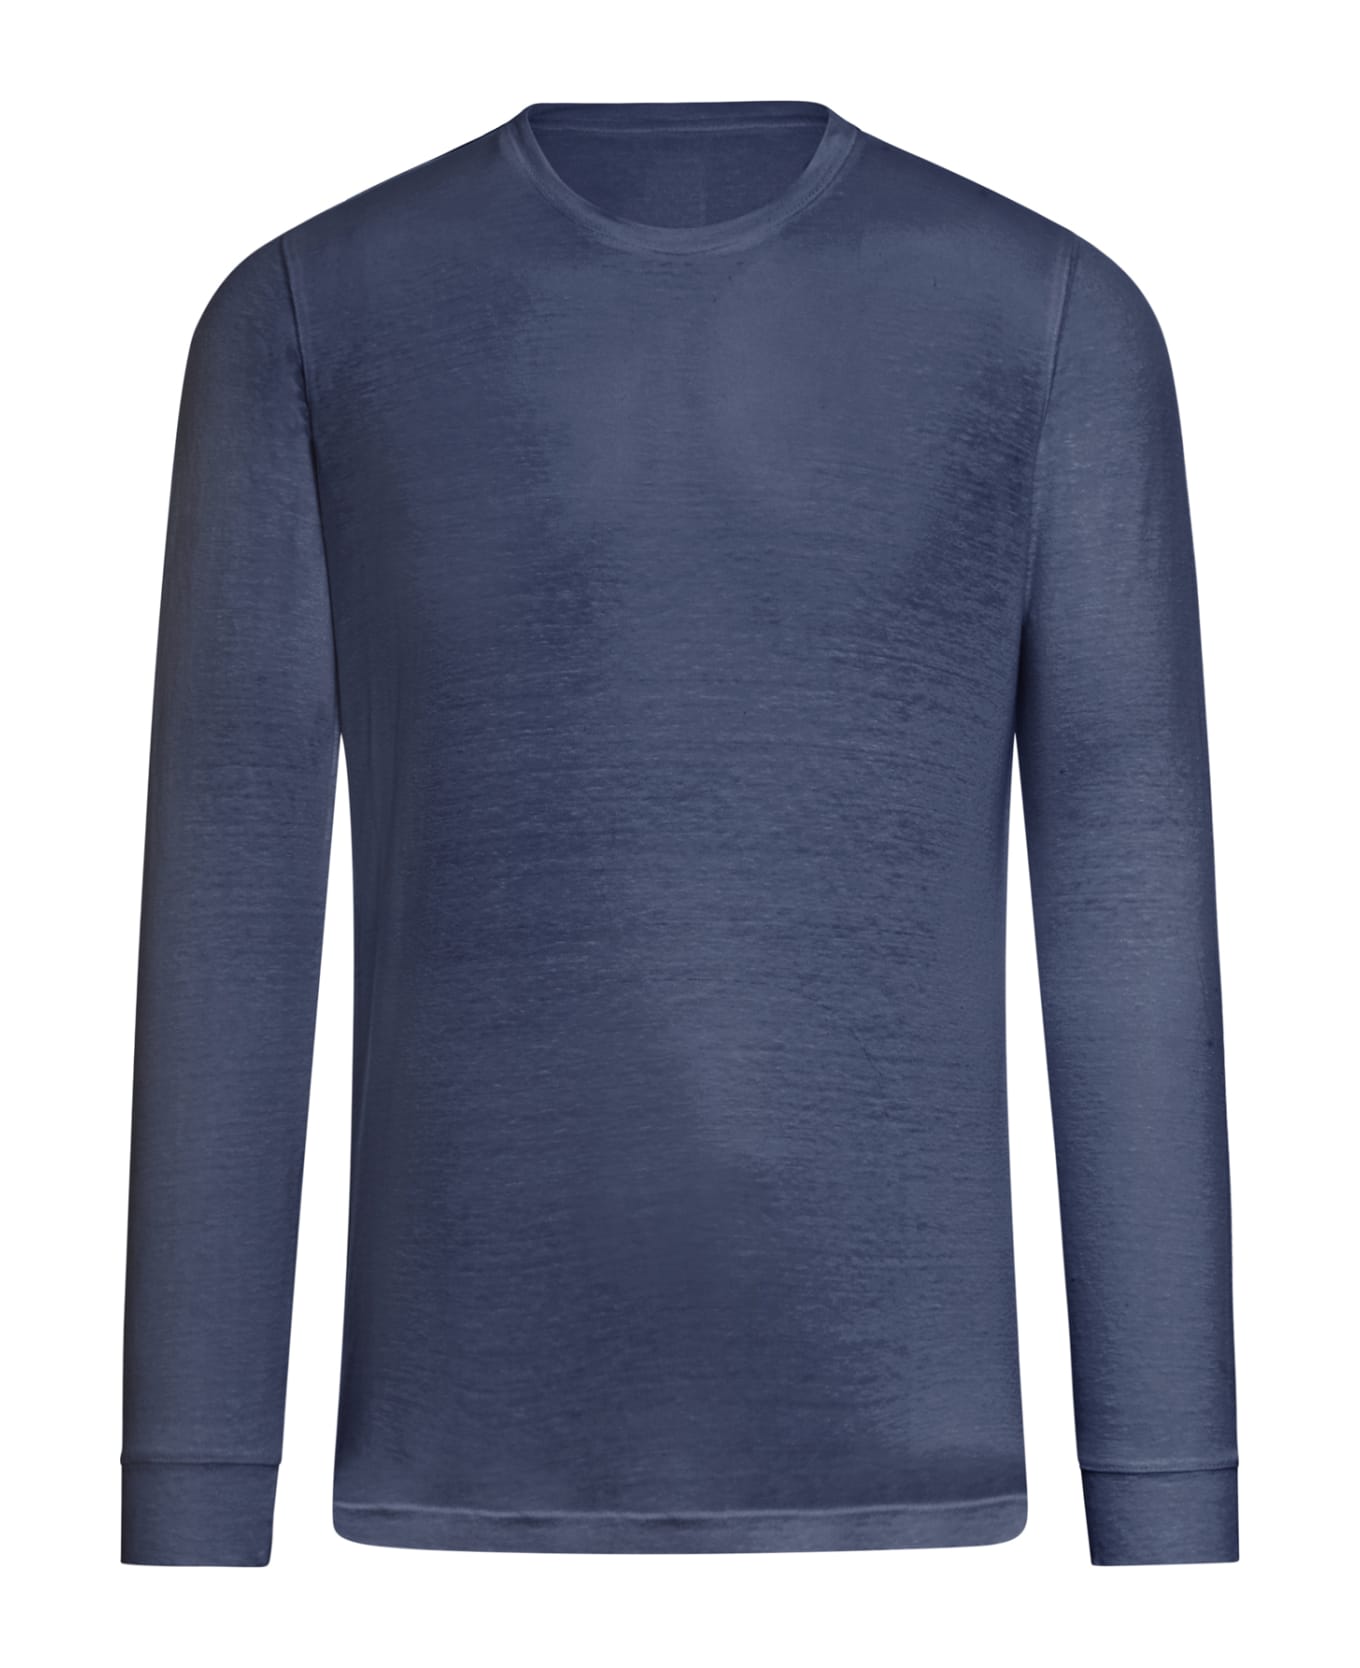 120% Lino Long Sleeve Men Tshirt - F Navy Blue